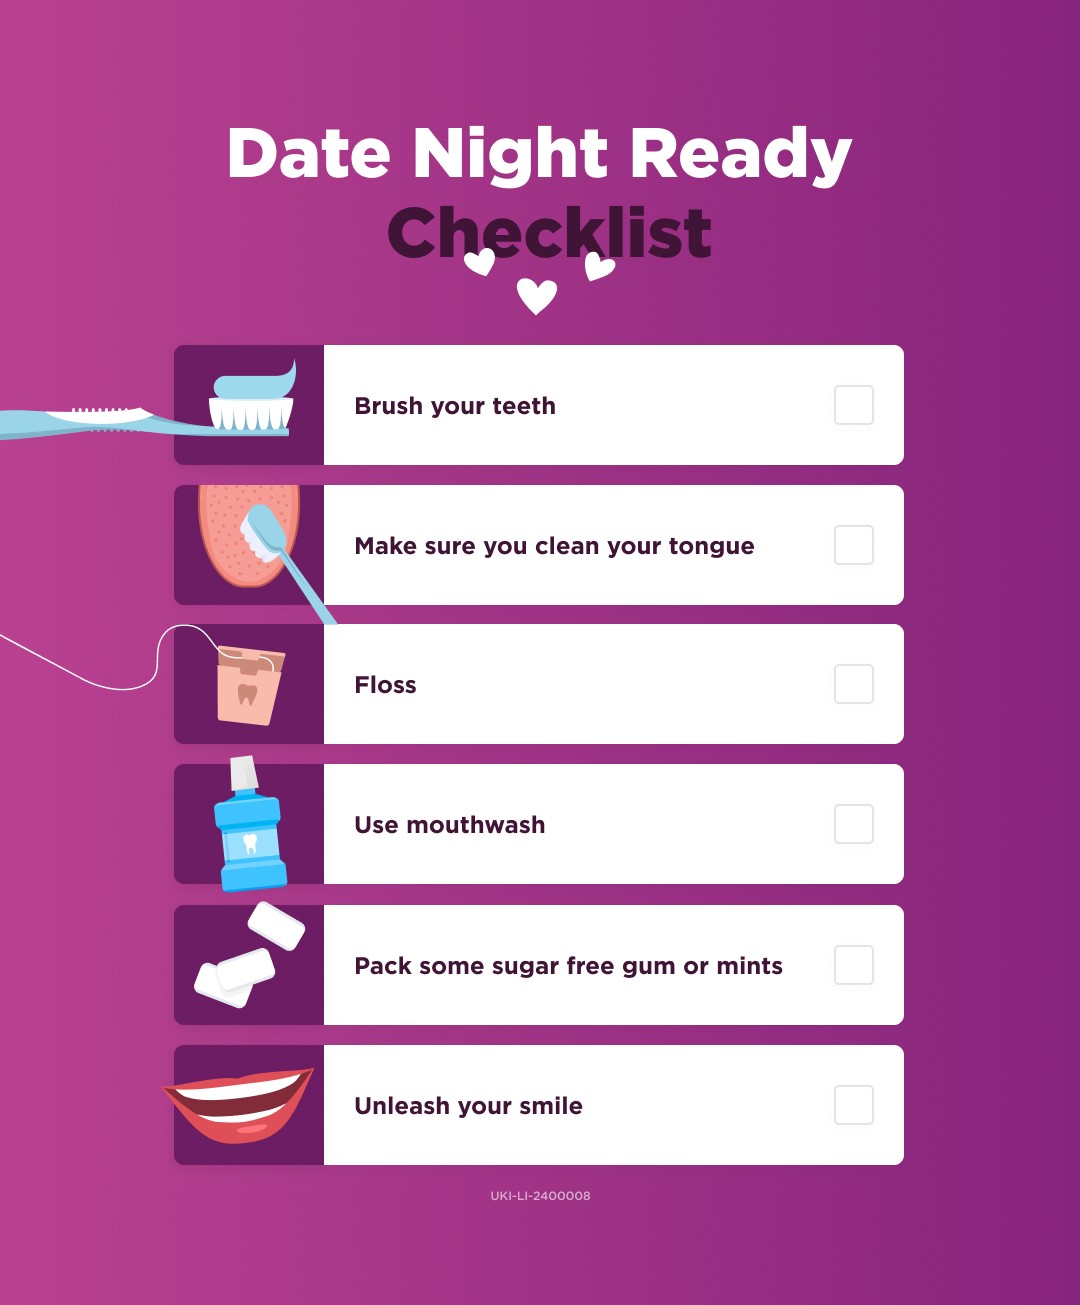 Date Night Ready Checklist